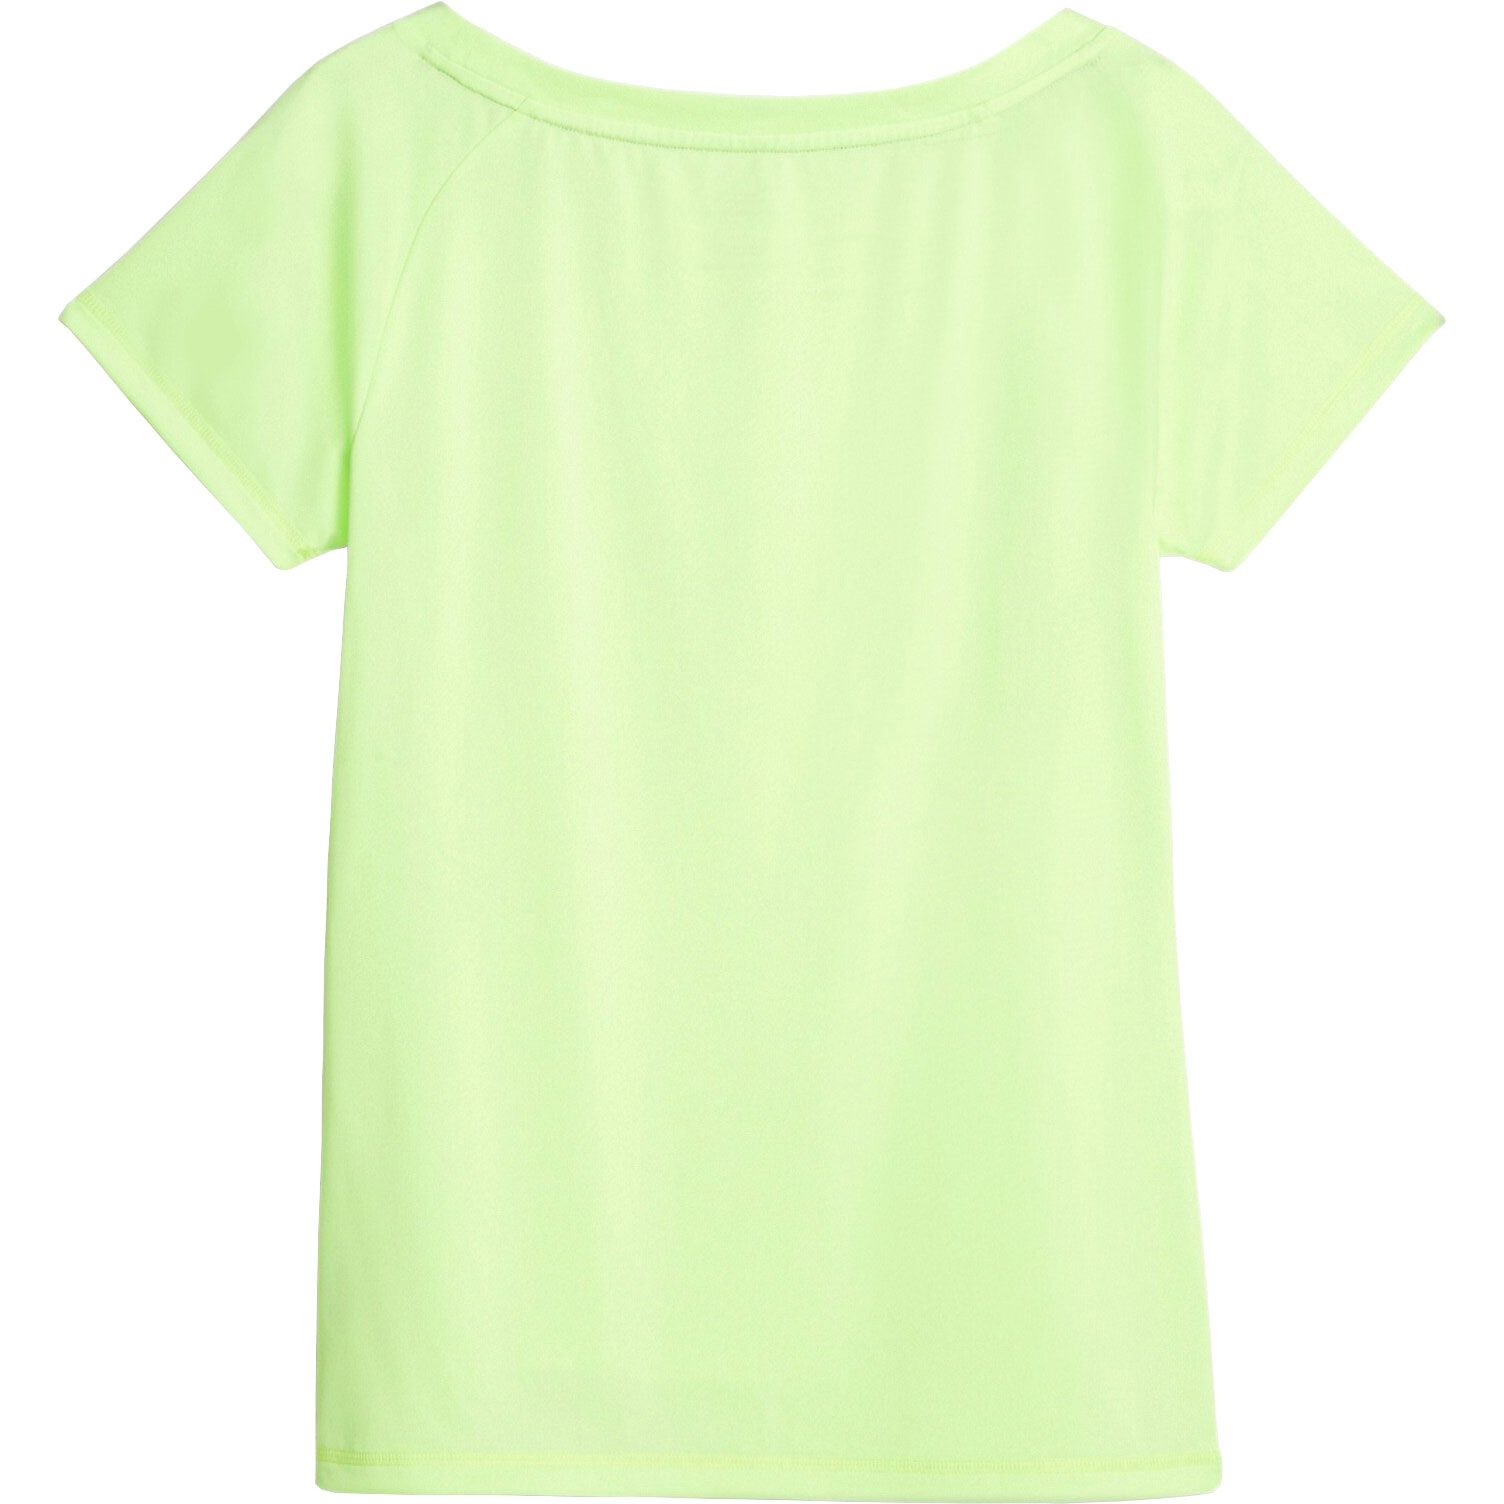 Puma - Train Favorite Jersey kaufen Bittl Damen T-Shirt green im Cat Shop Sport speed